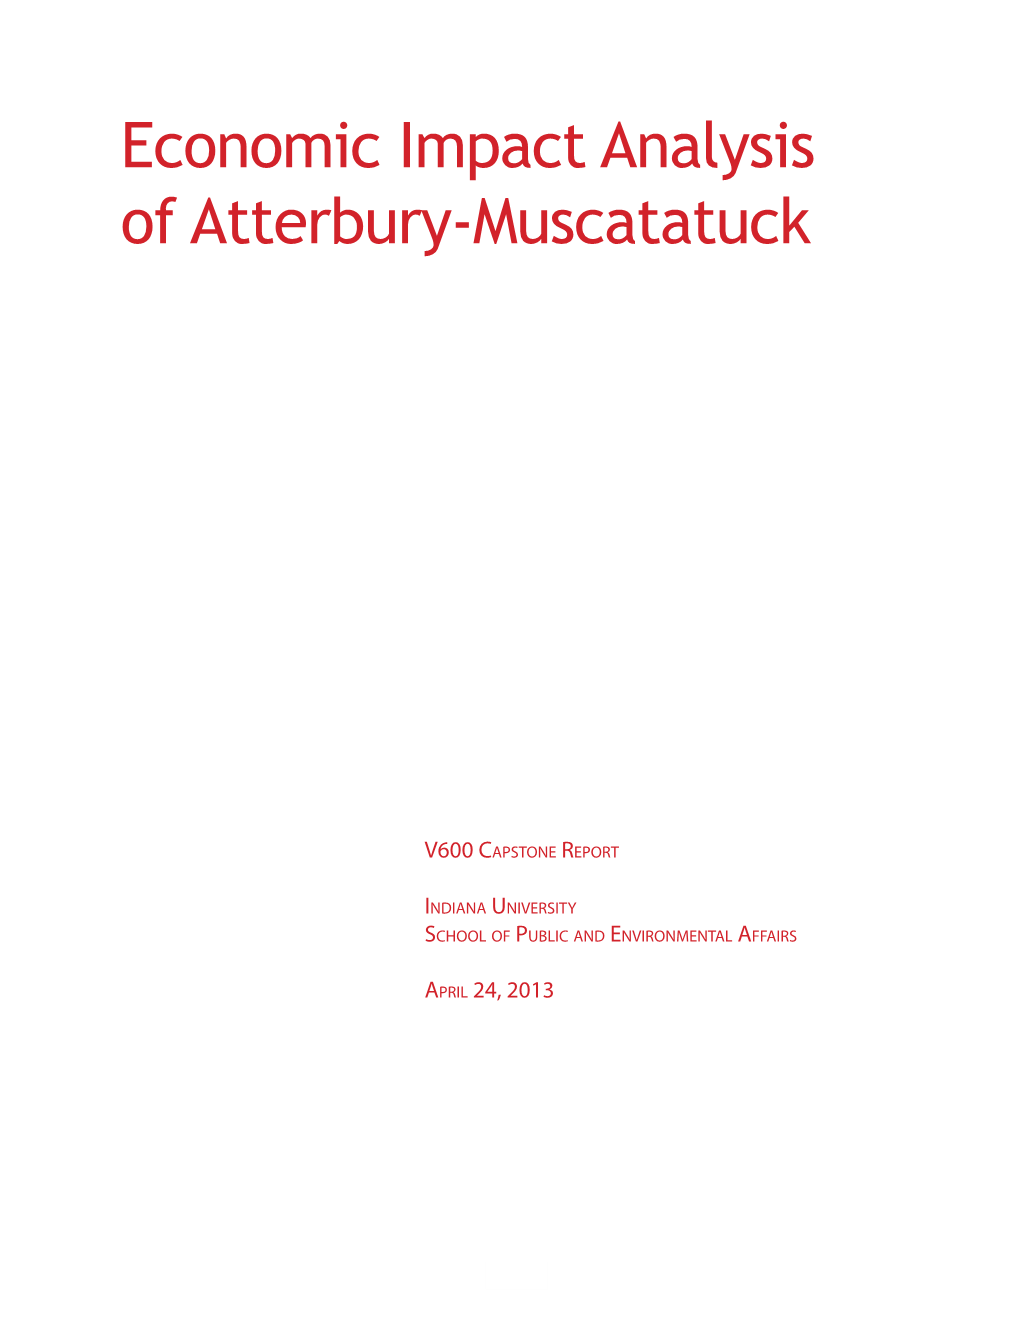 Economic Impact Analysis of Atterbury-Muscatatuck